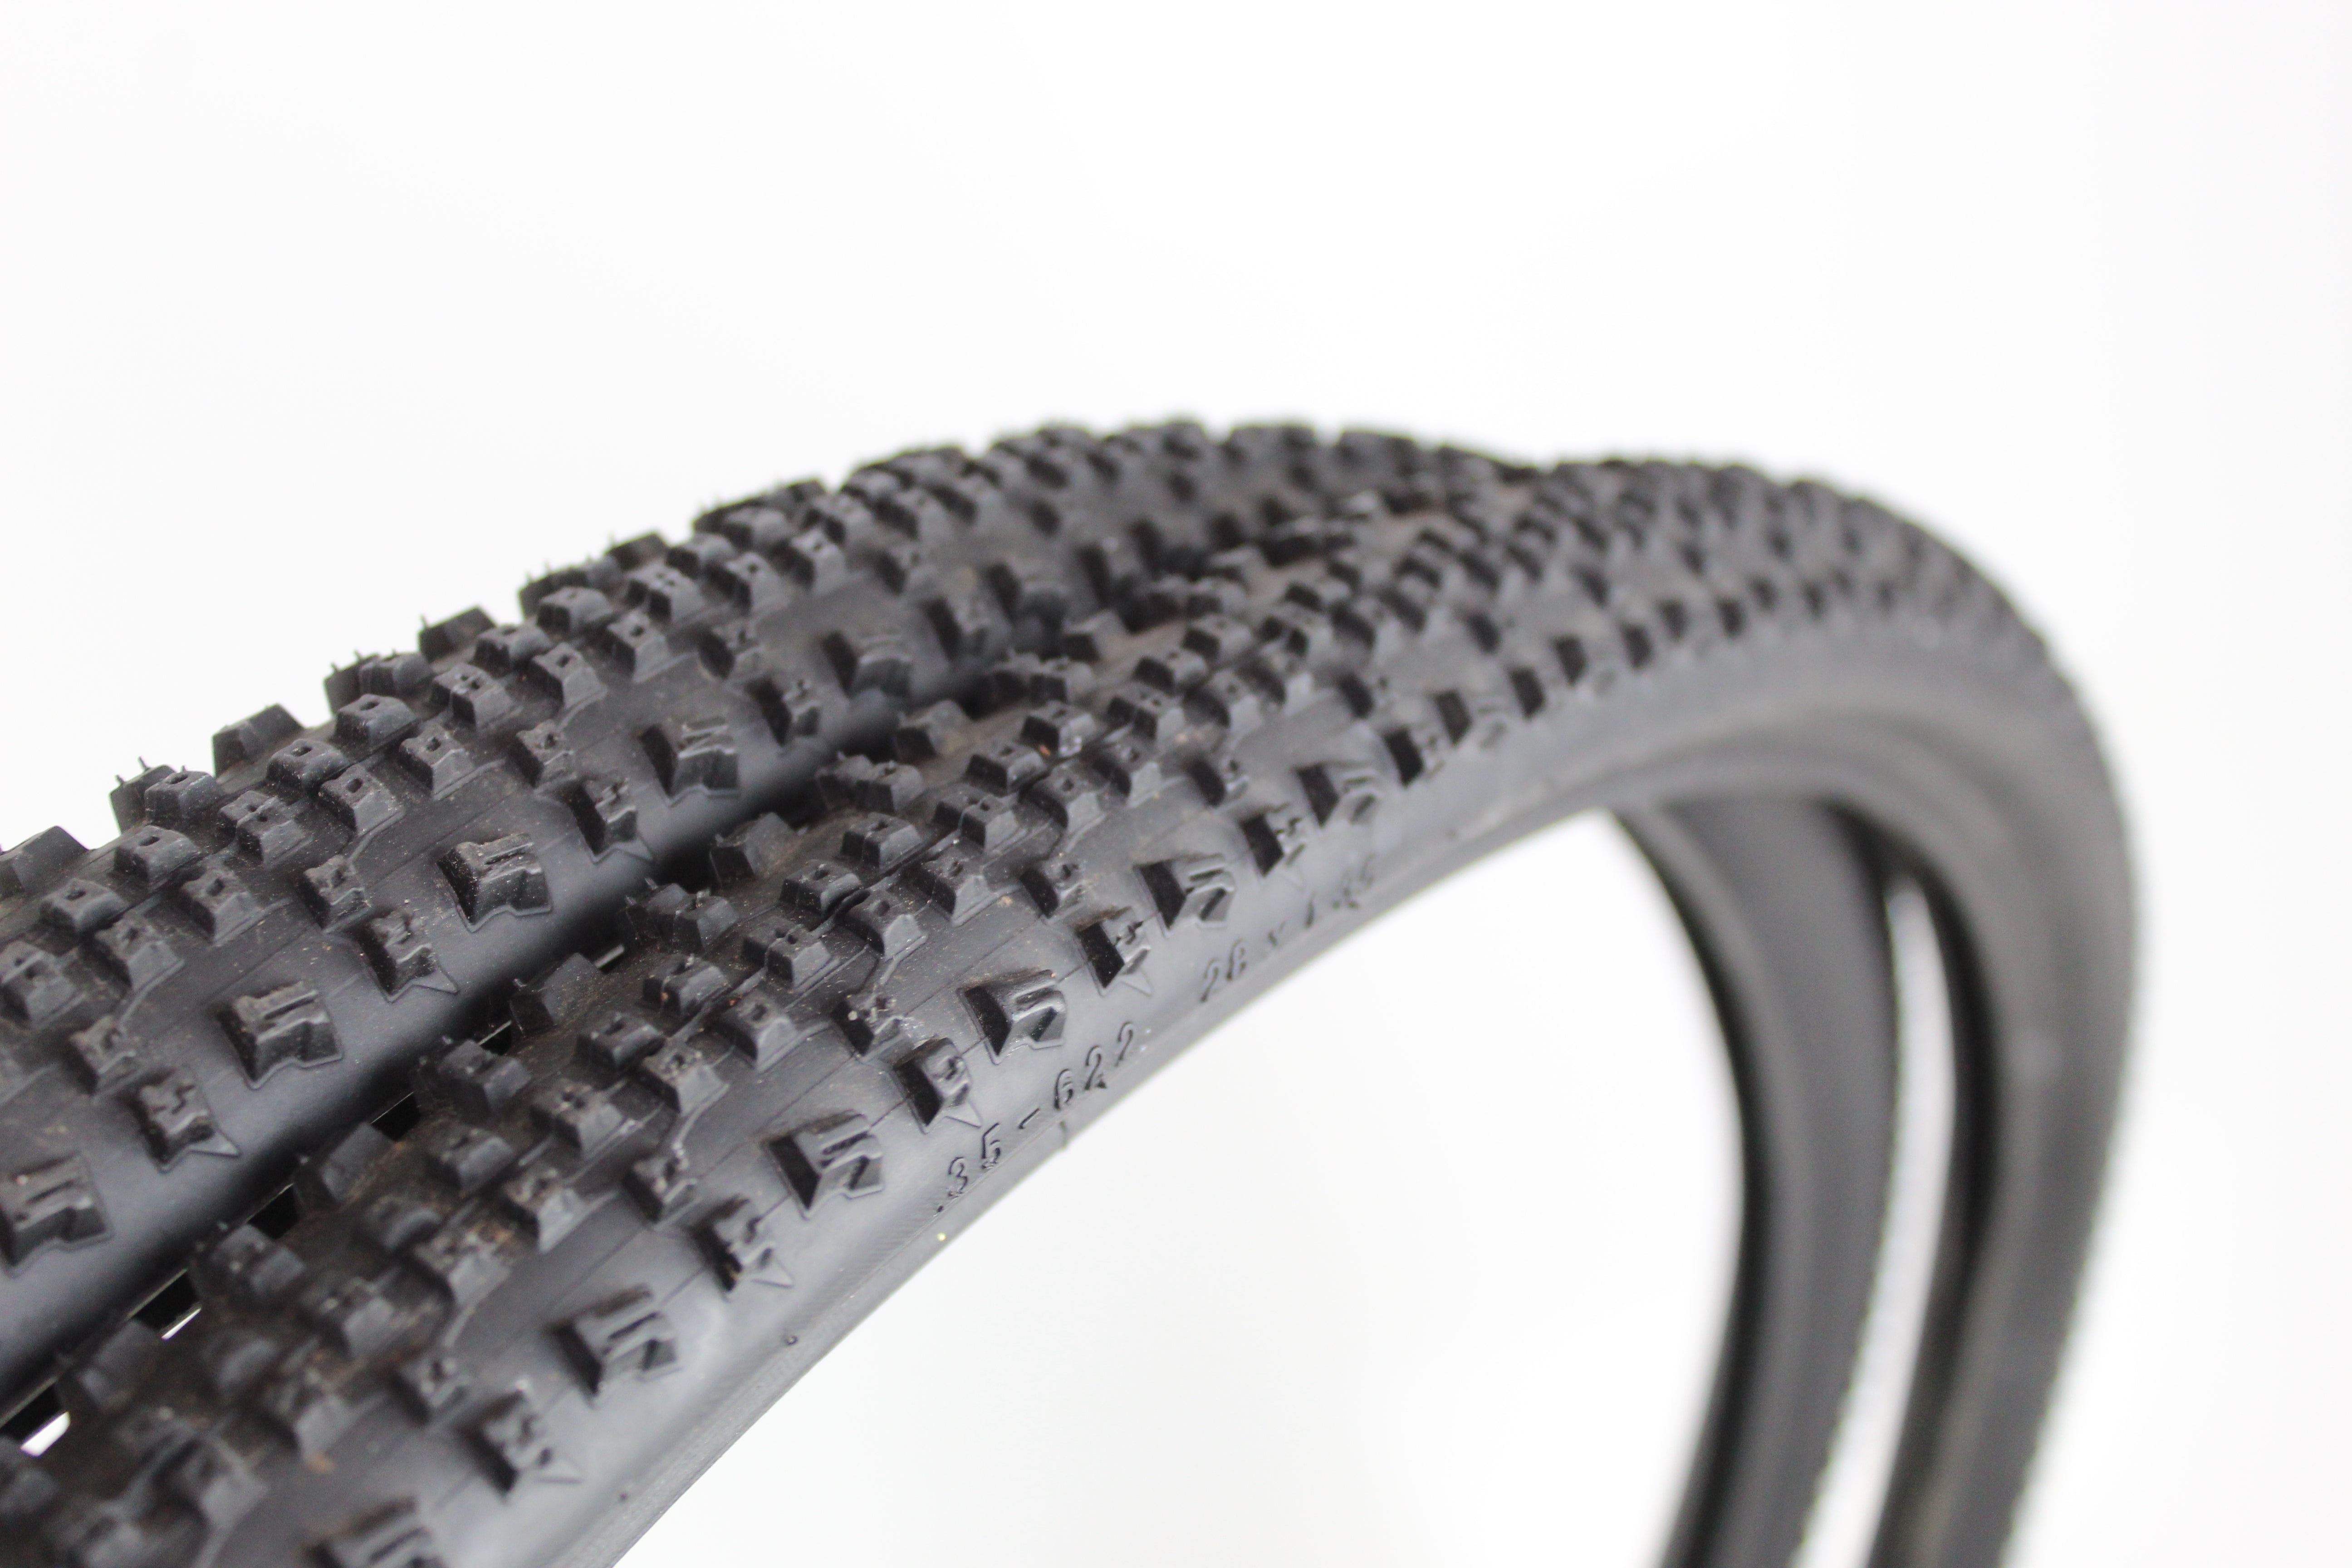 2 x Gravel Tyre - Schwalbe Rapid Rob, 700x35c - Grade A